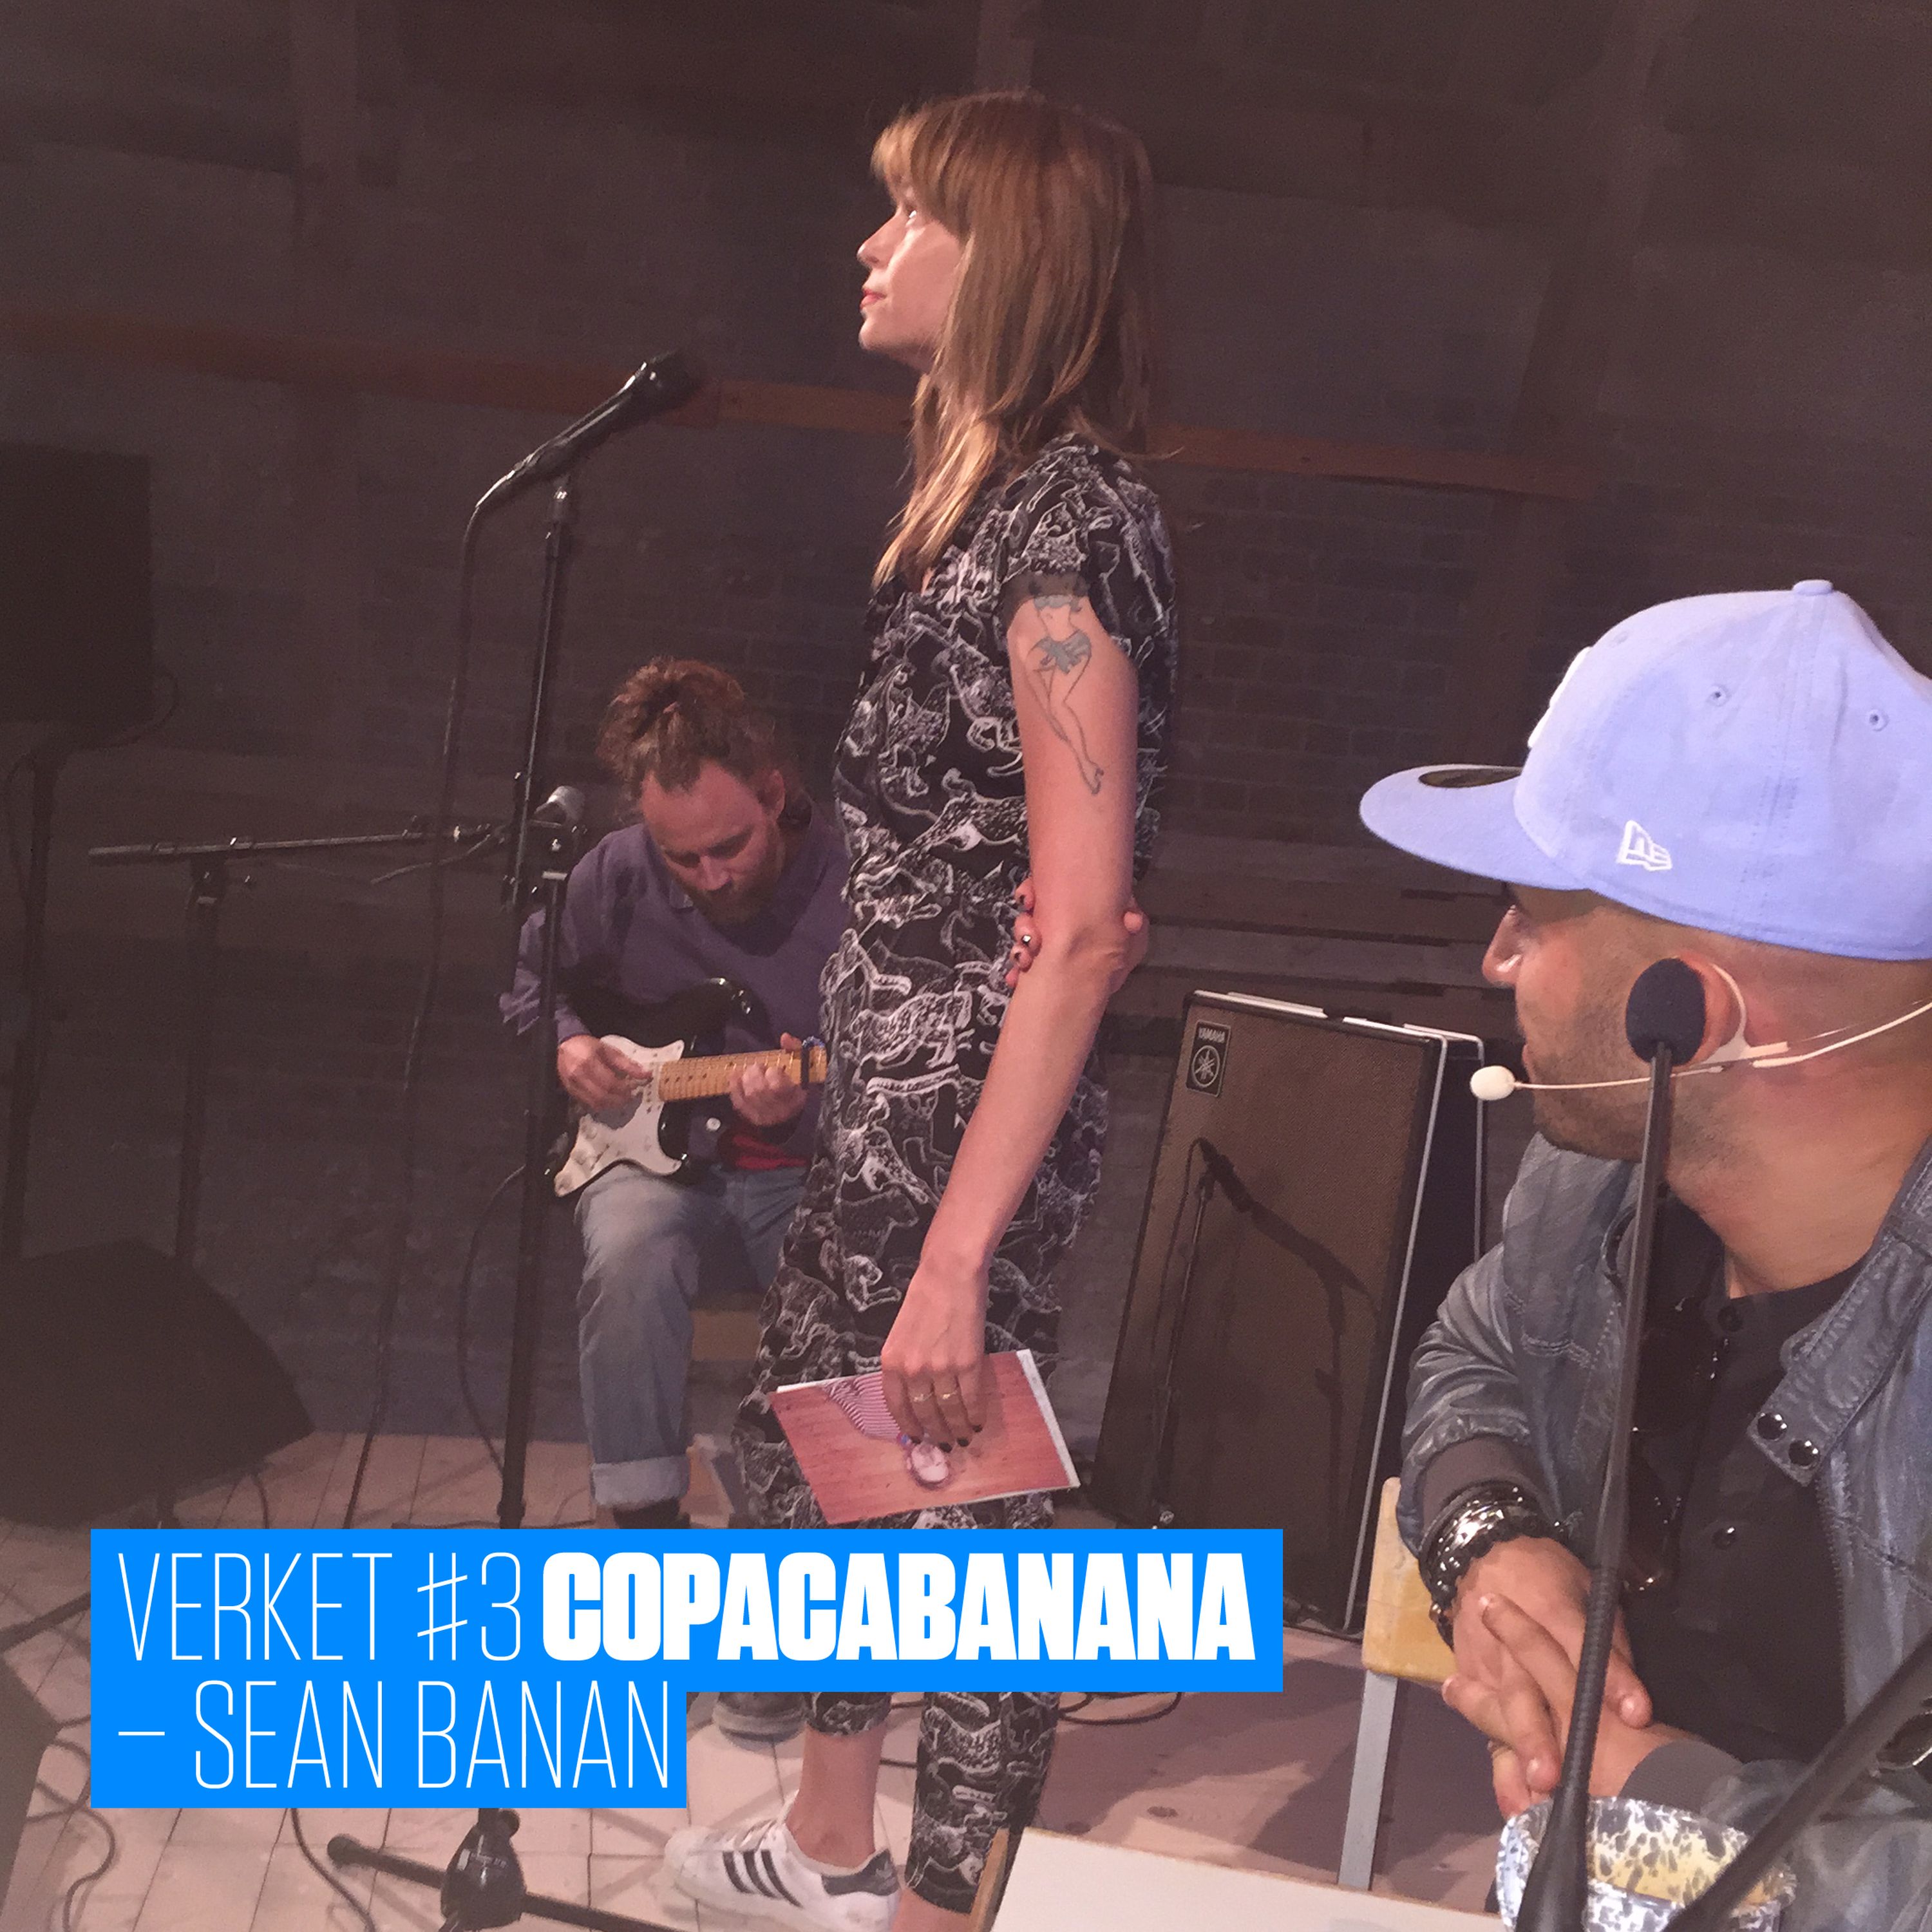 VERKET #3: Sean Banan - Copacabanana